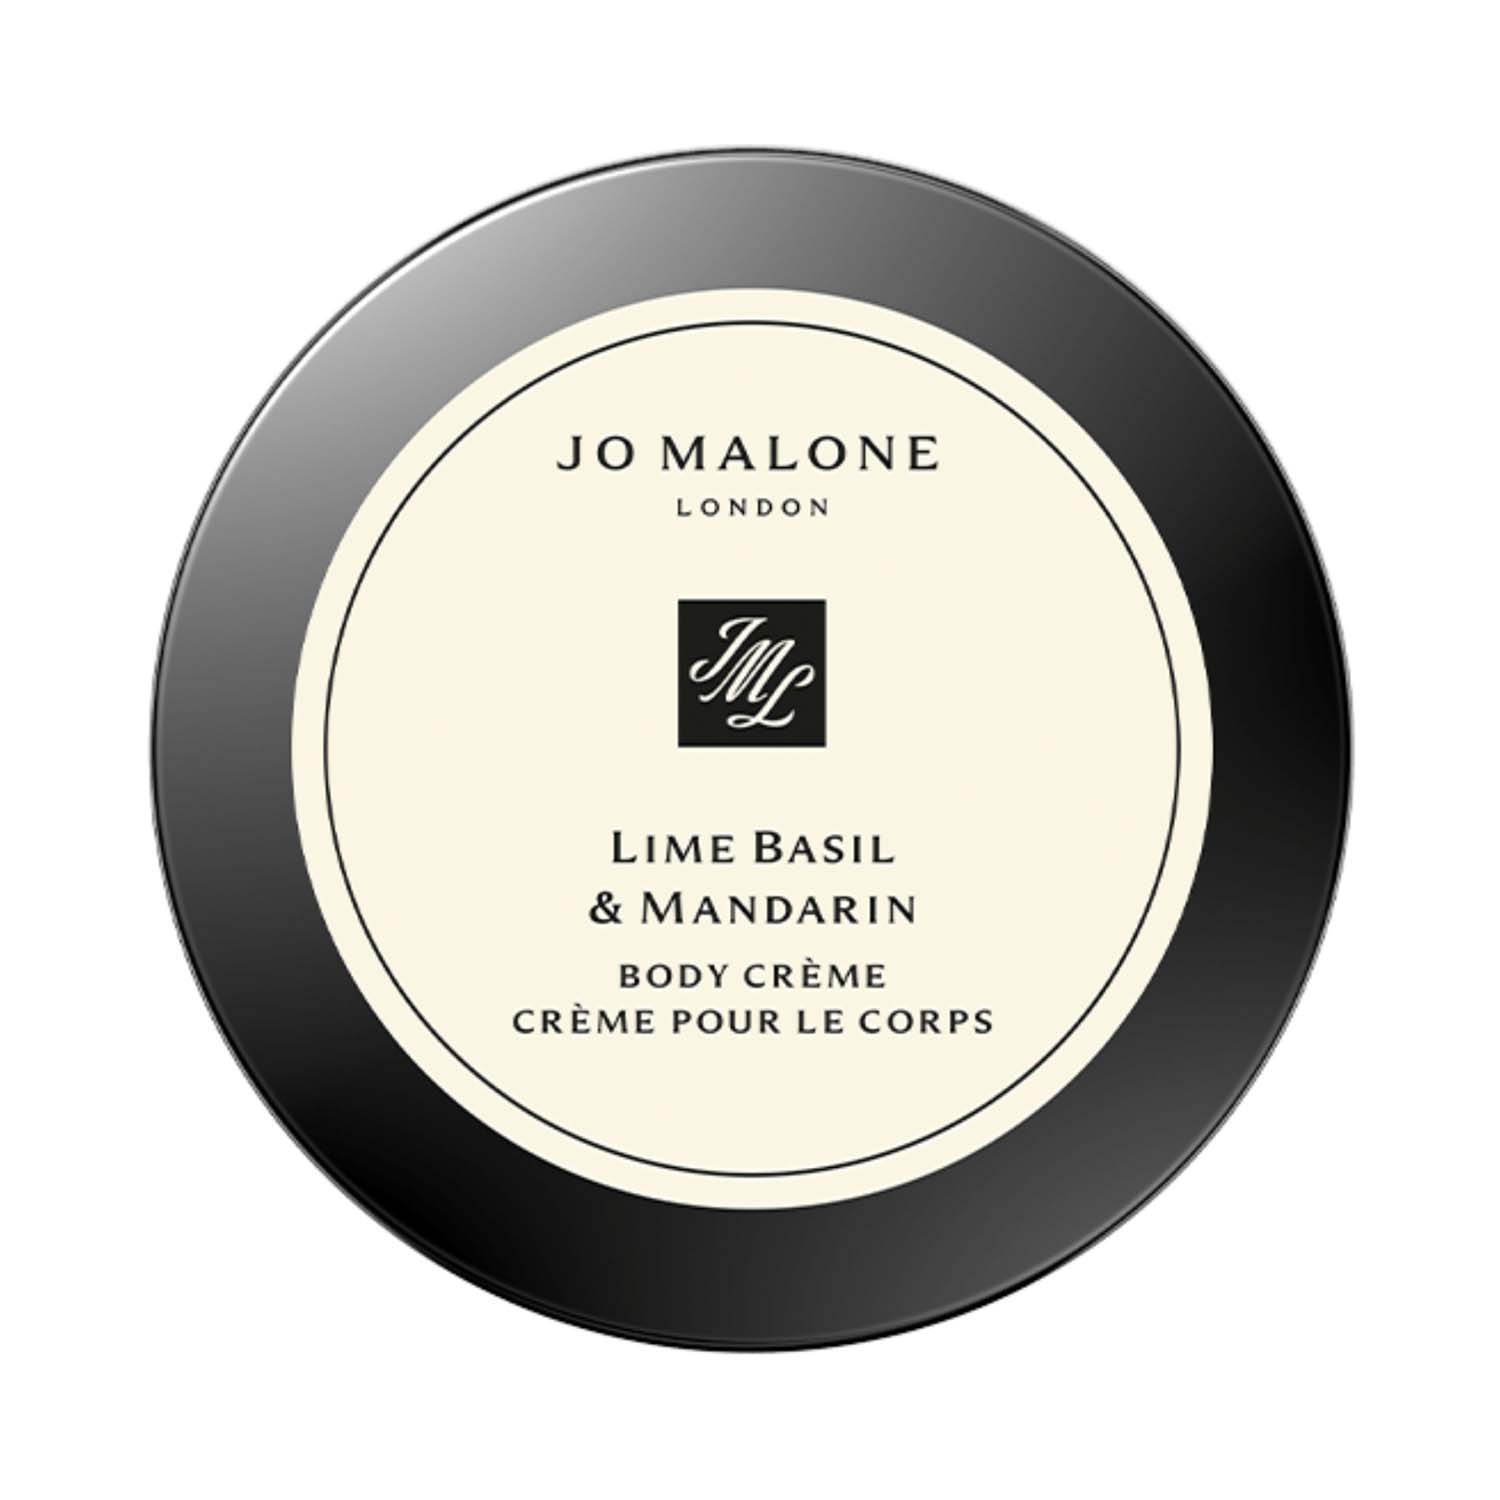 Jo Malone London | Jo Malone London Lime Basil & Mandarin Body Creme (50ml)